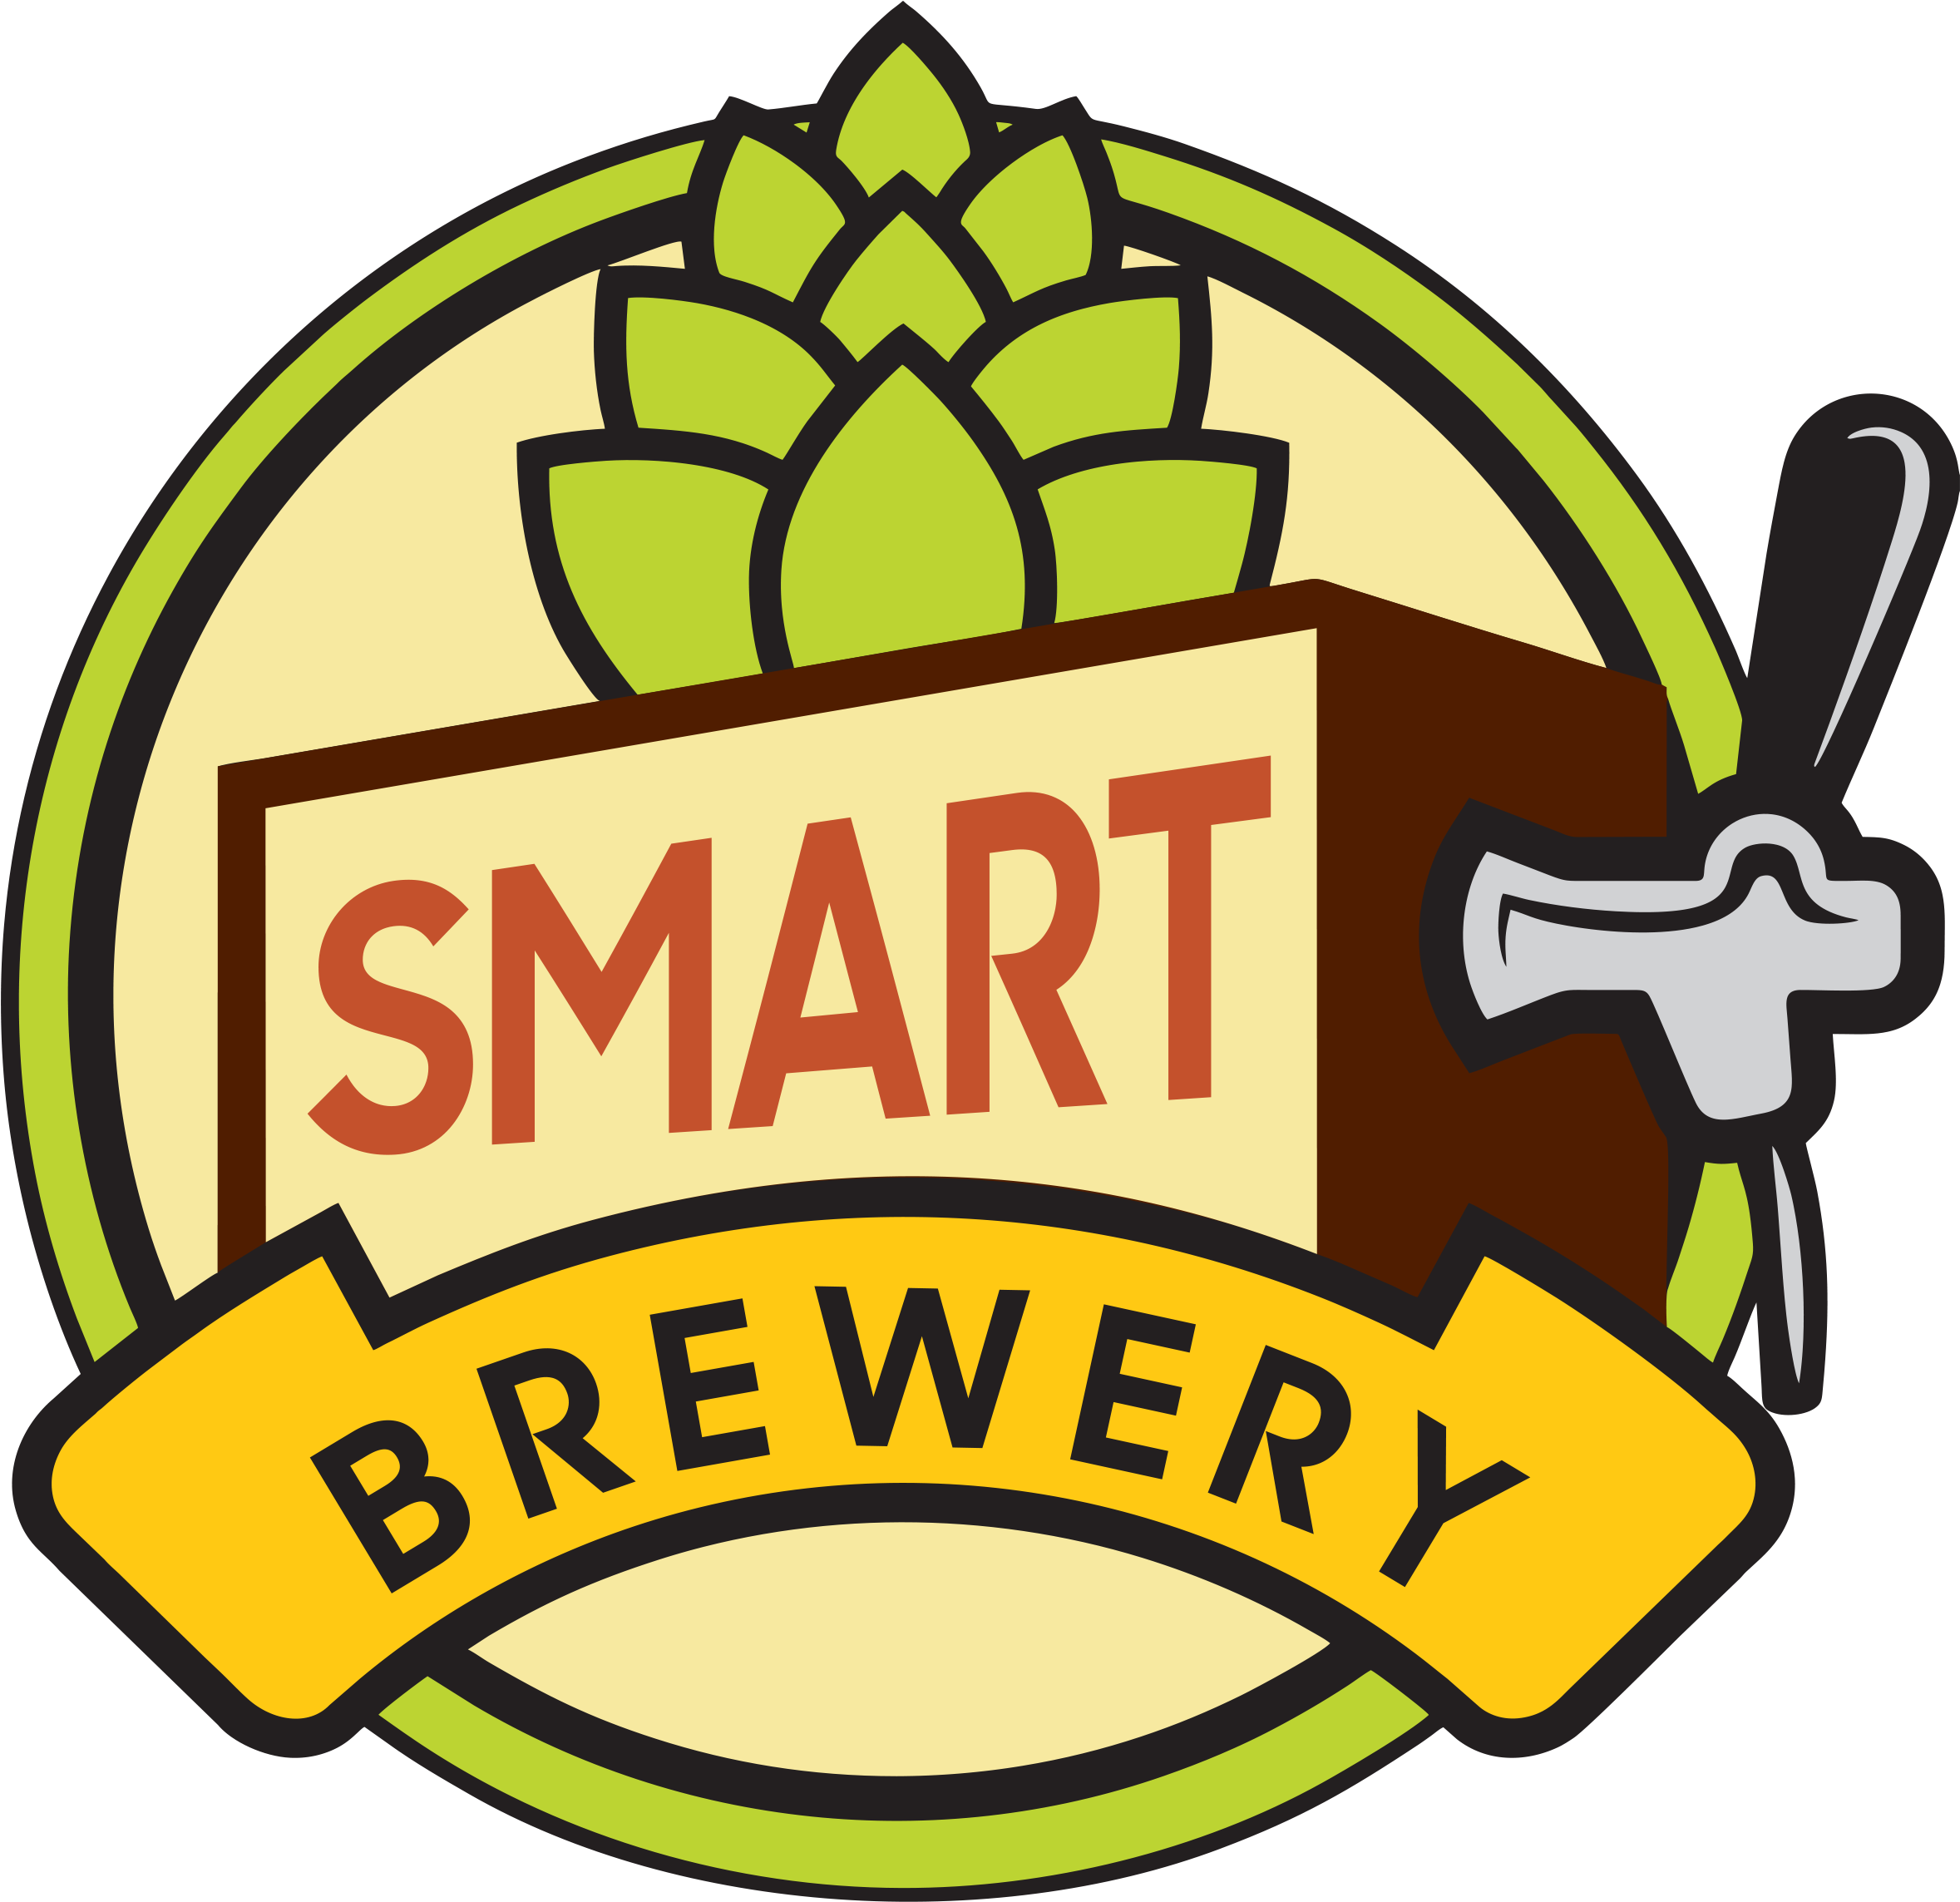 Logo - Brewery (2381x2381)